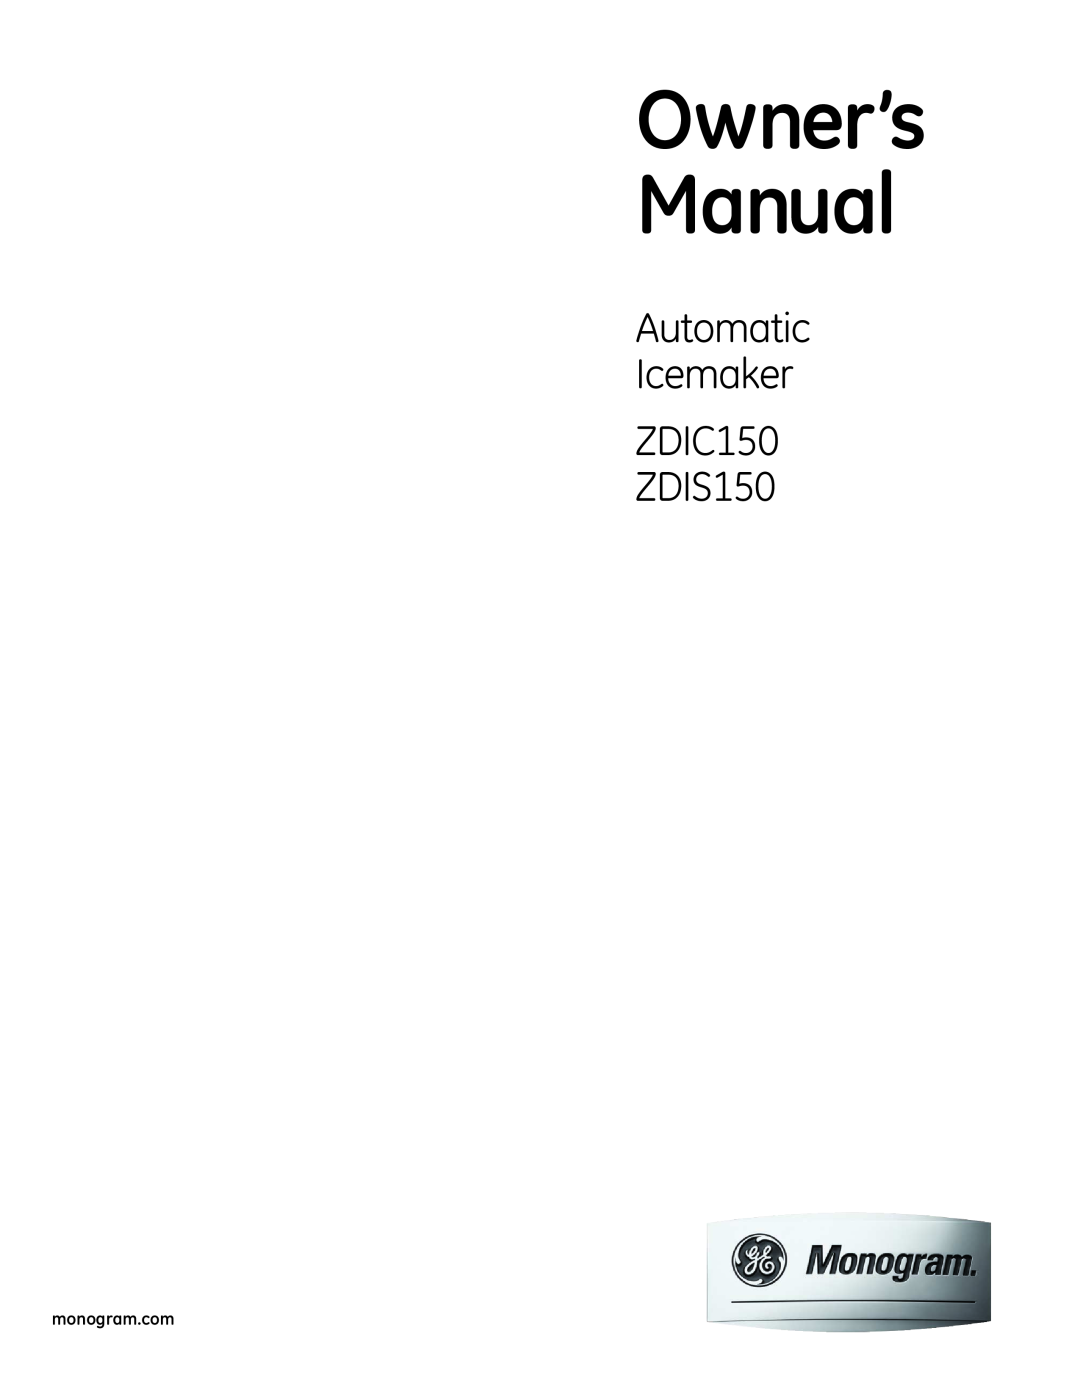 GE Monogram owner manual Automatic Icemaker ZDIC150 ZDIS150 